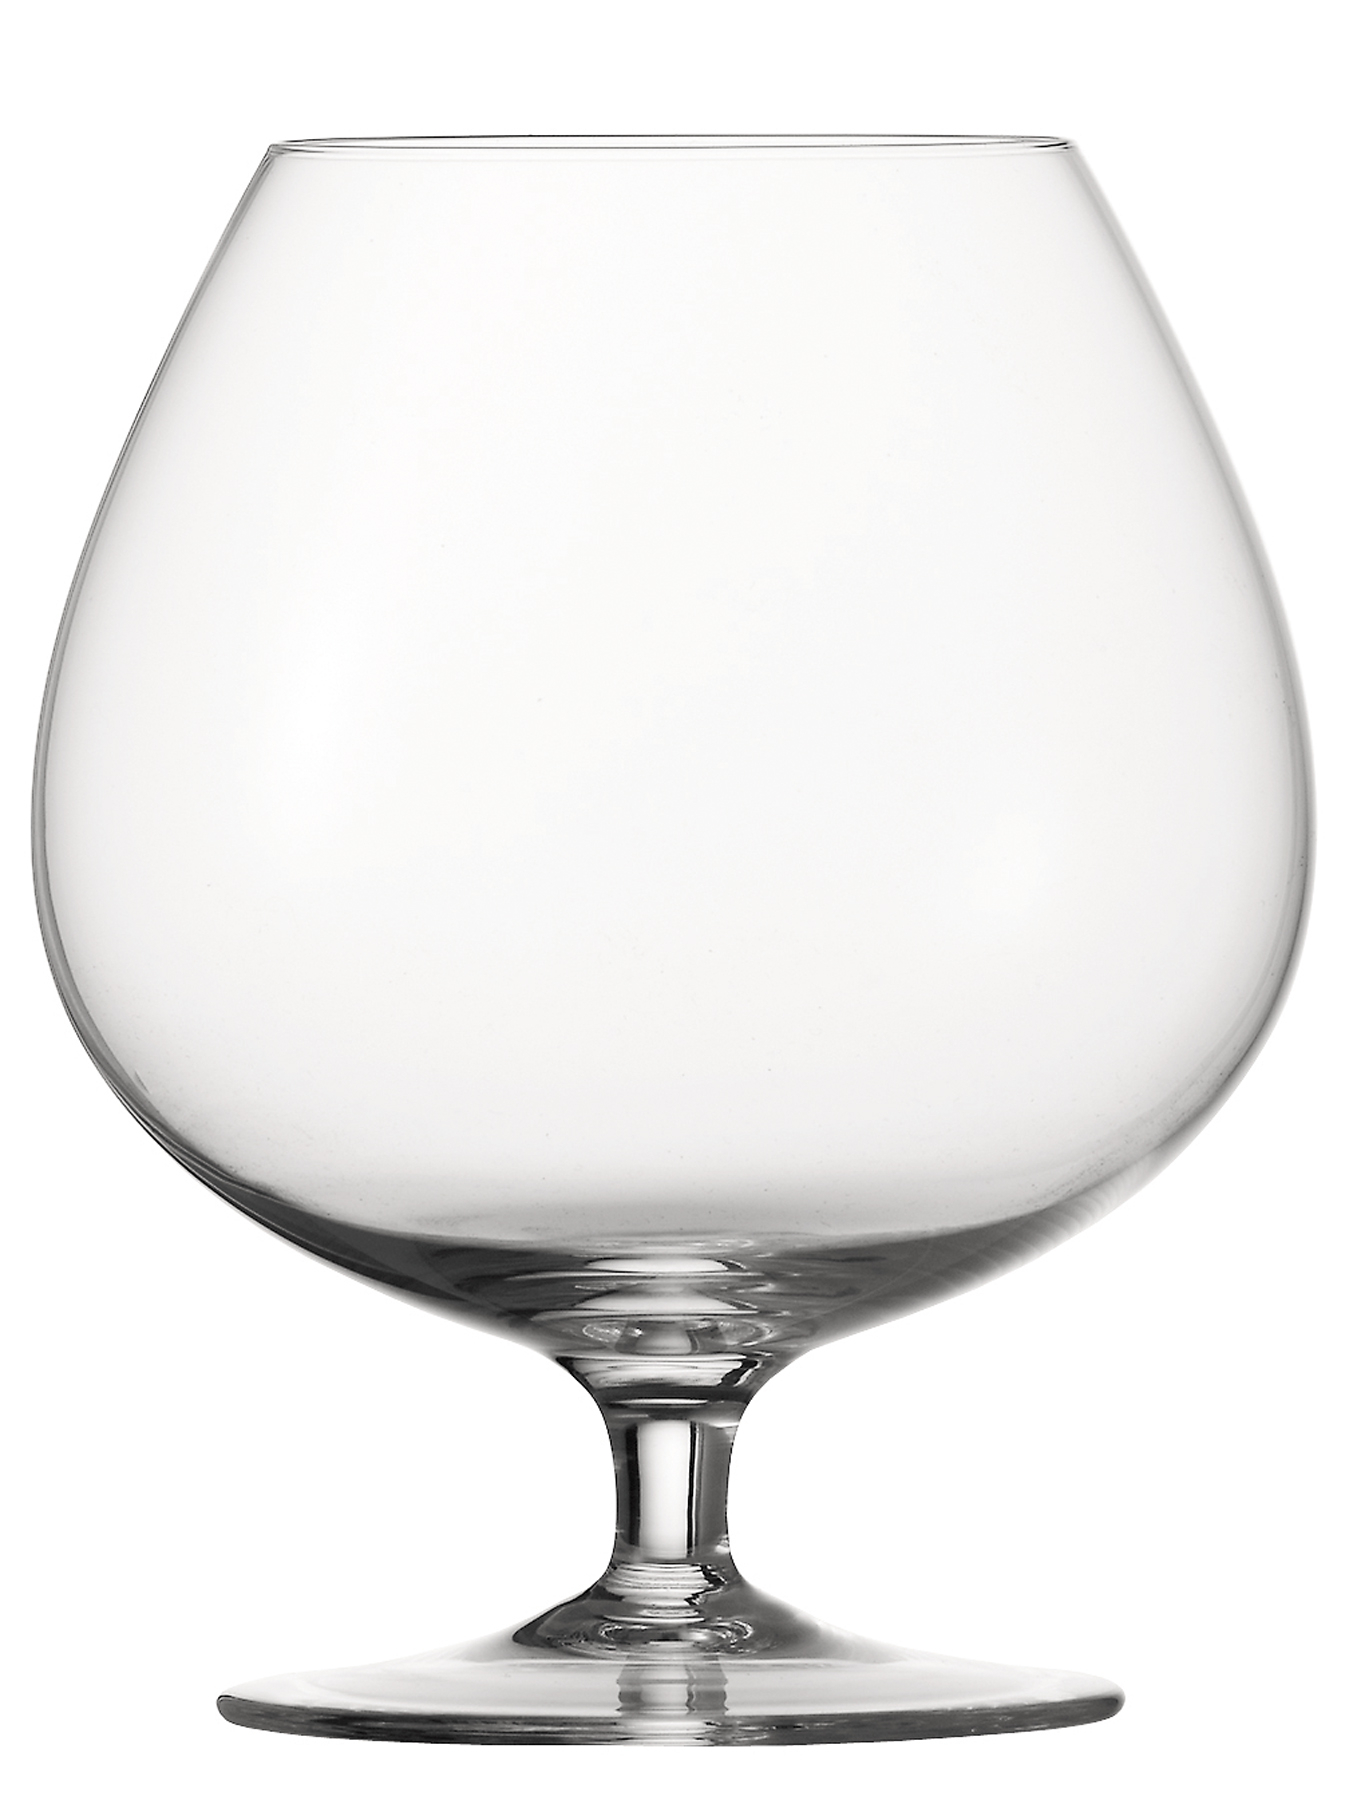 Cognac XL Premium, Special Glasses, Spiegelau - 920ml (1 pc.)